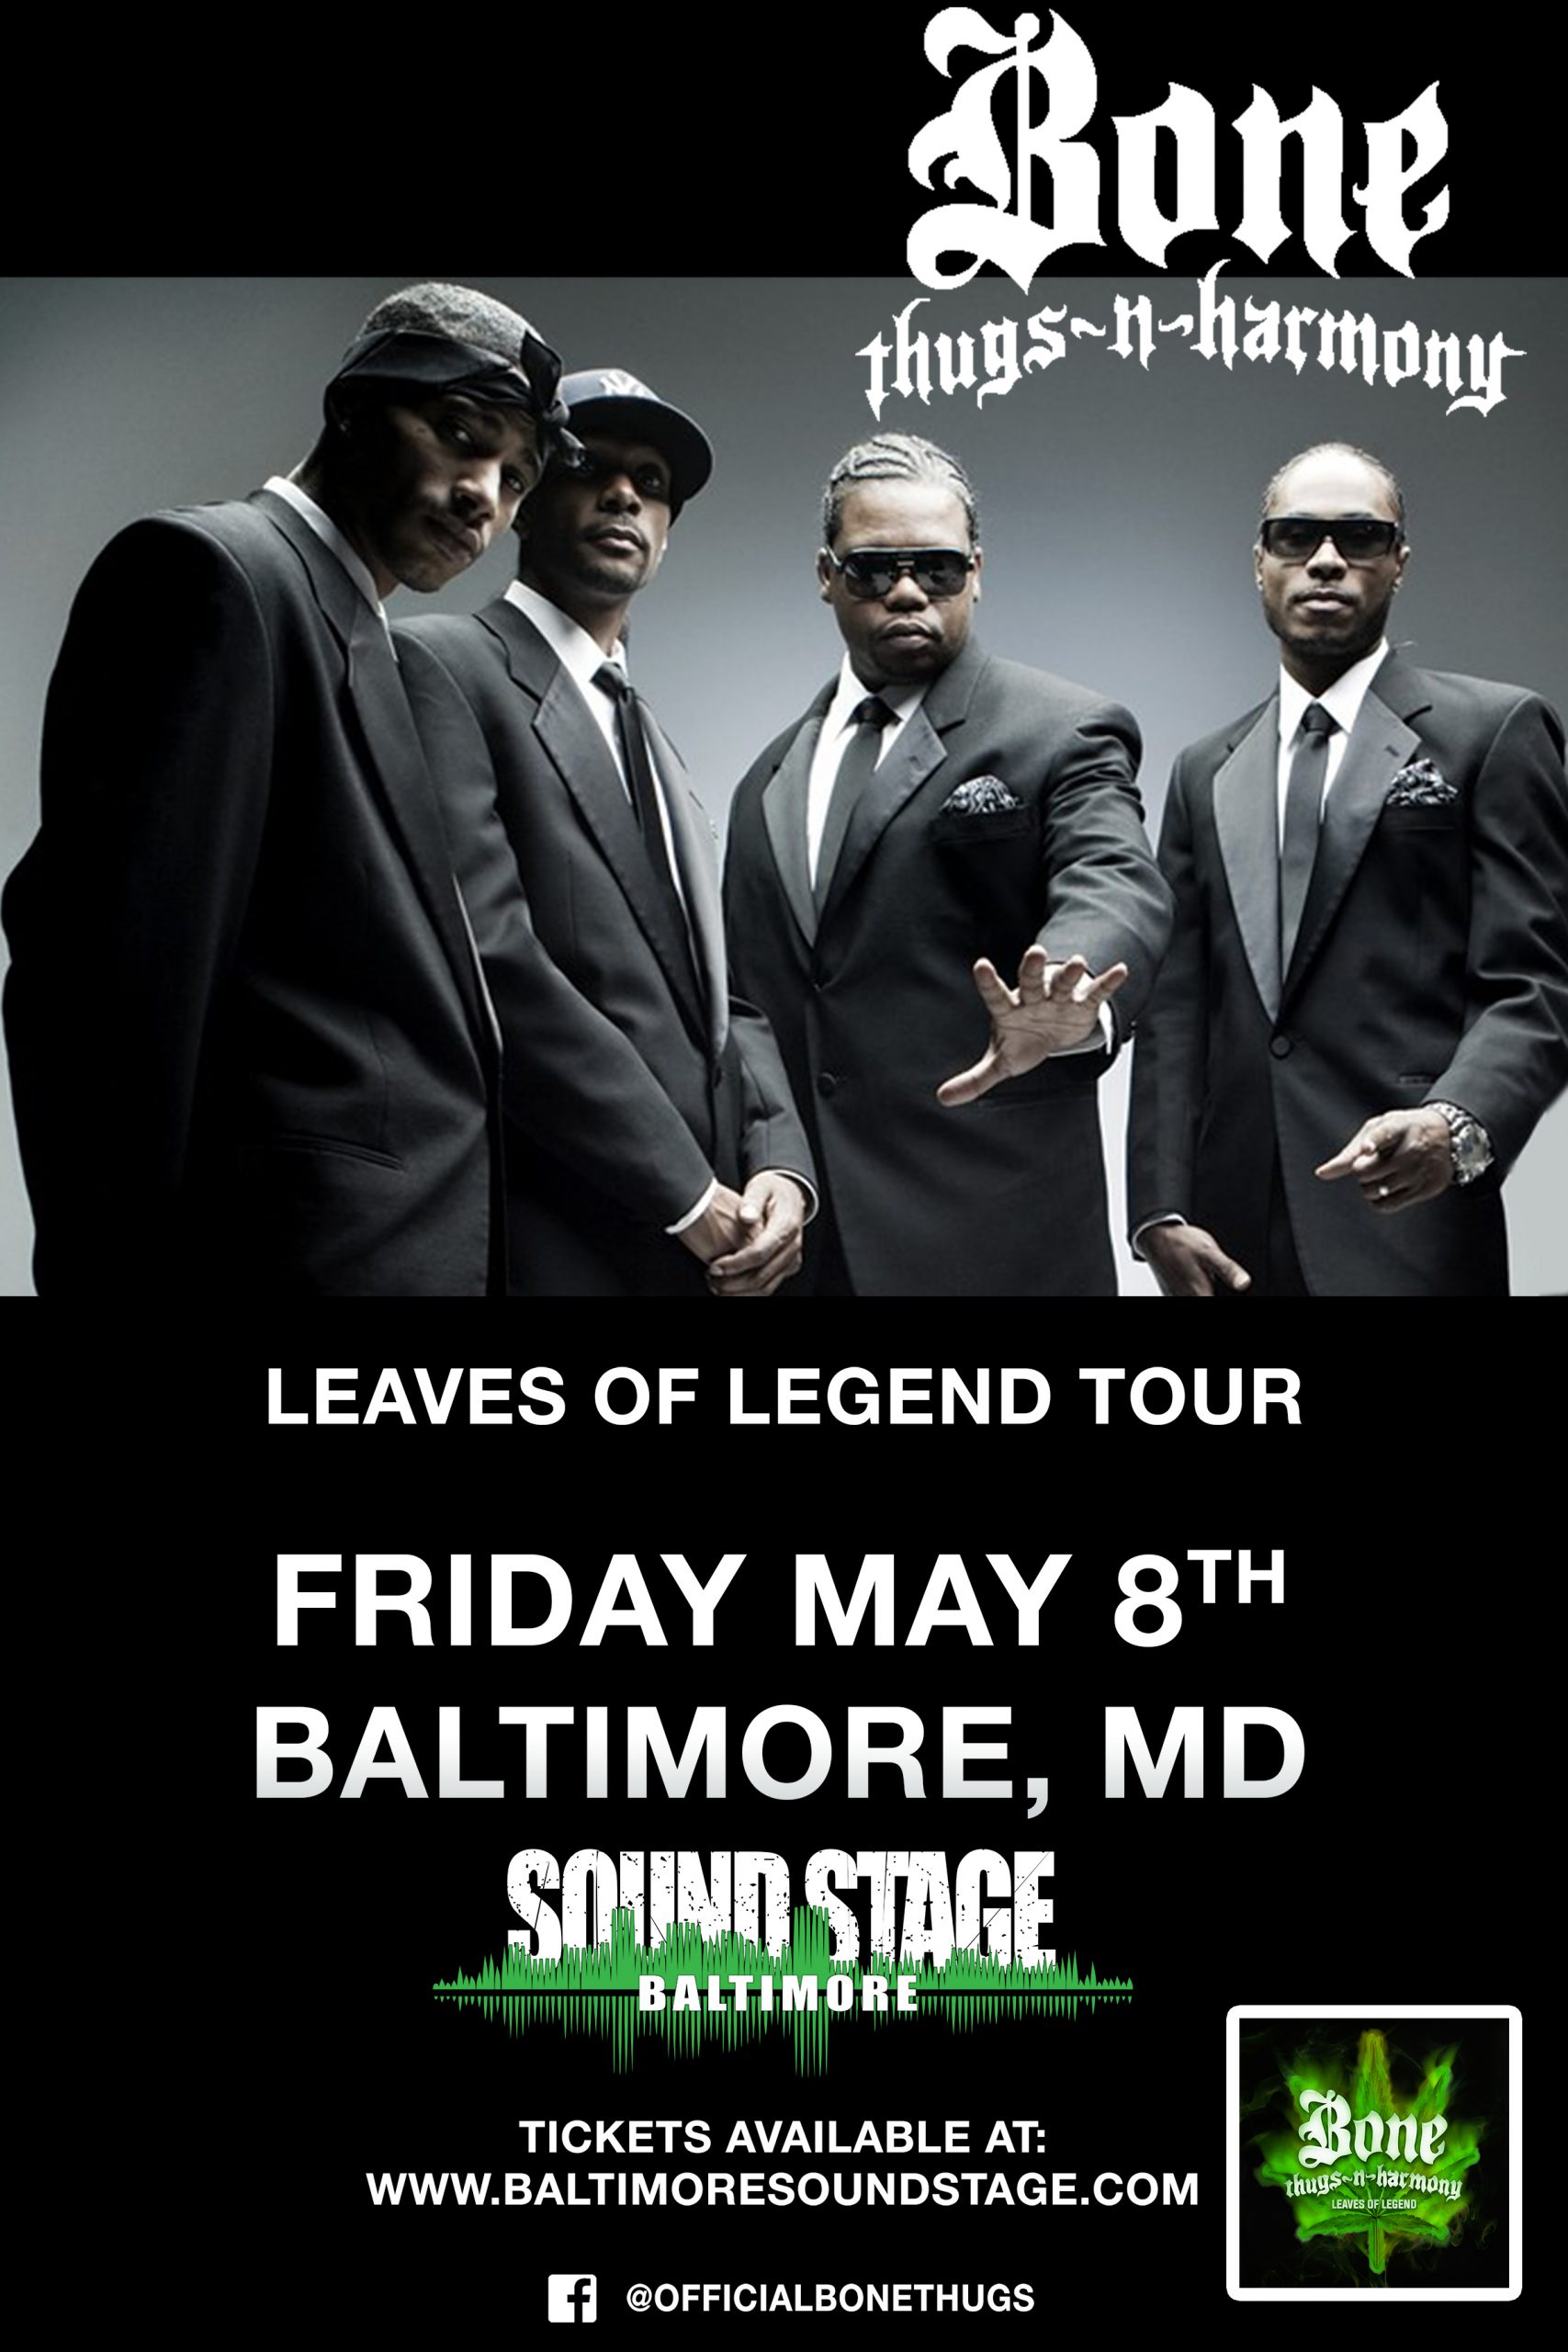 Bone ThugsNHarmony Leaves of Legend Tour Baltimore Soundstage